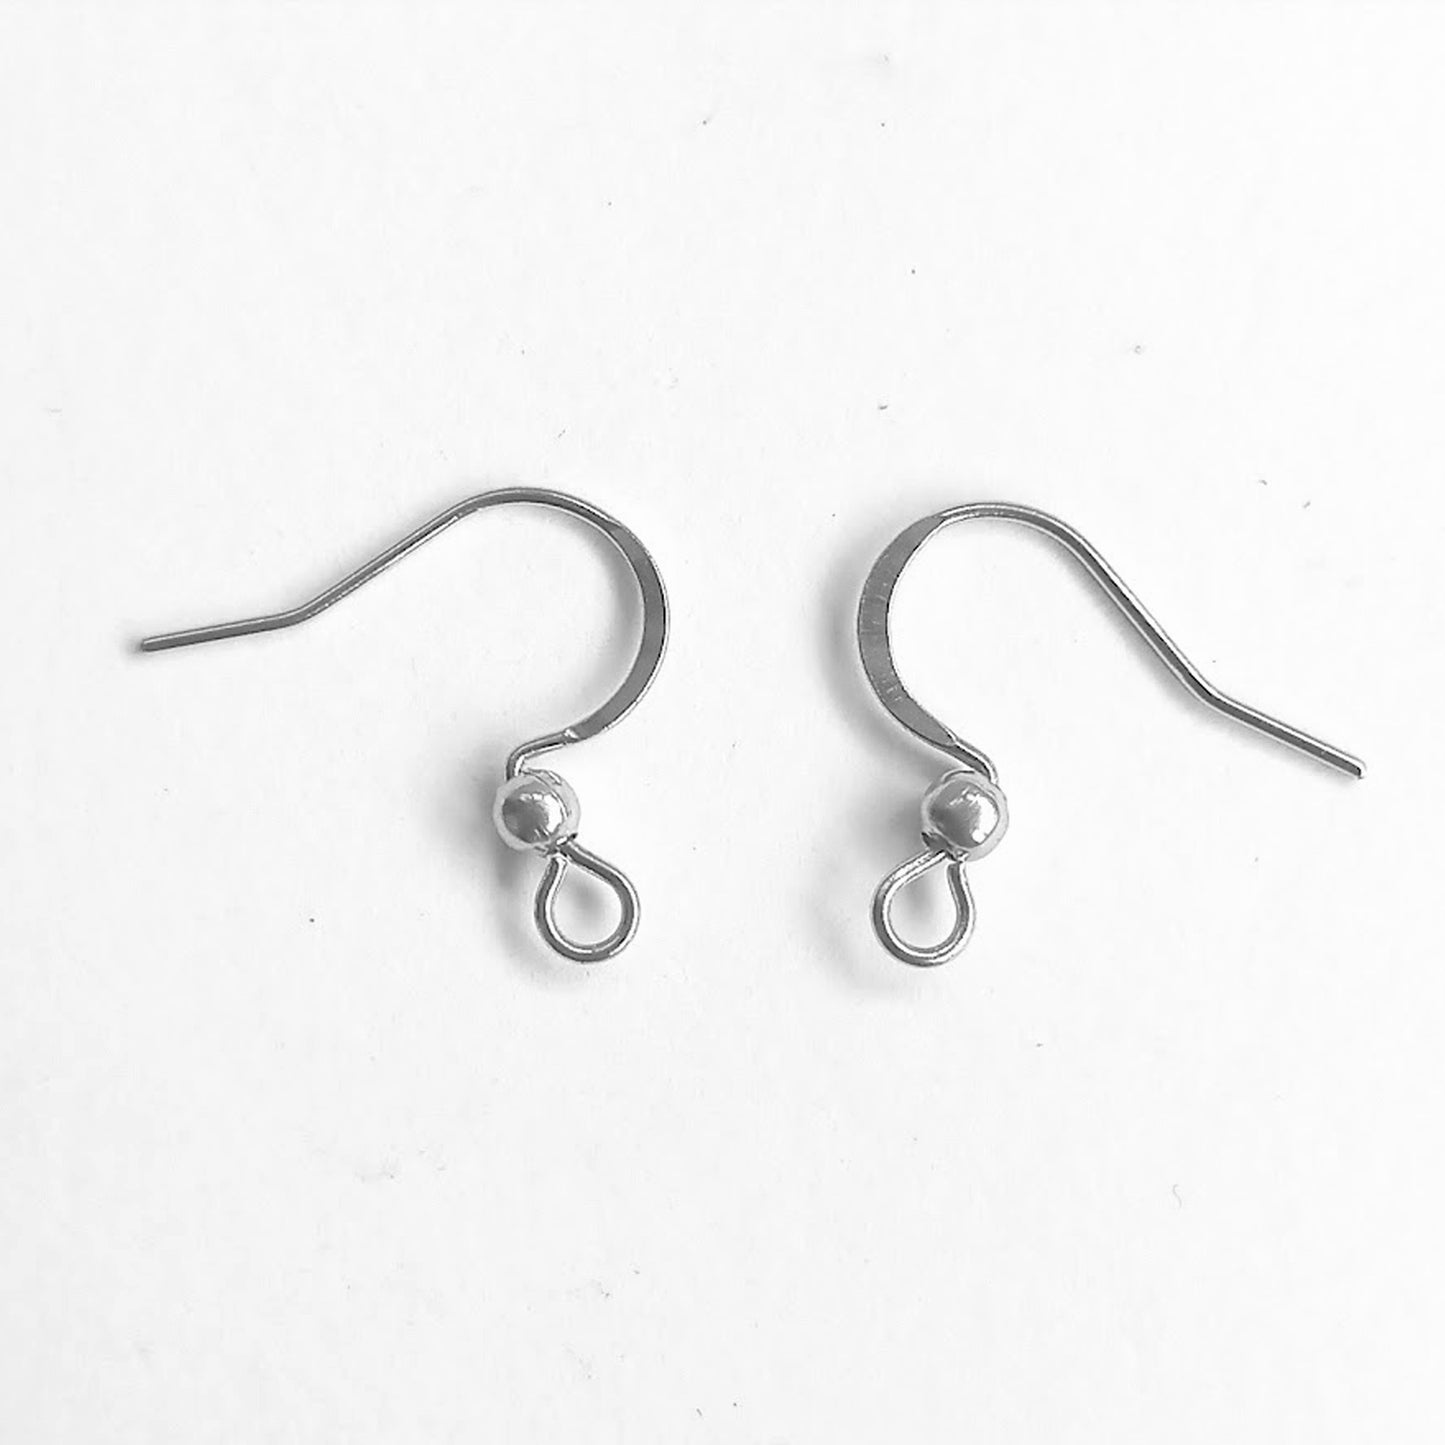 304 Stainless Steel French Earring Hooks